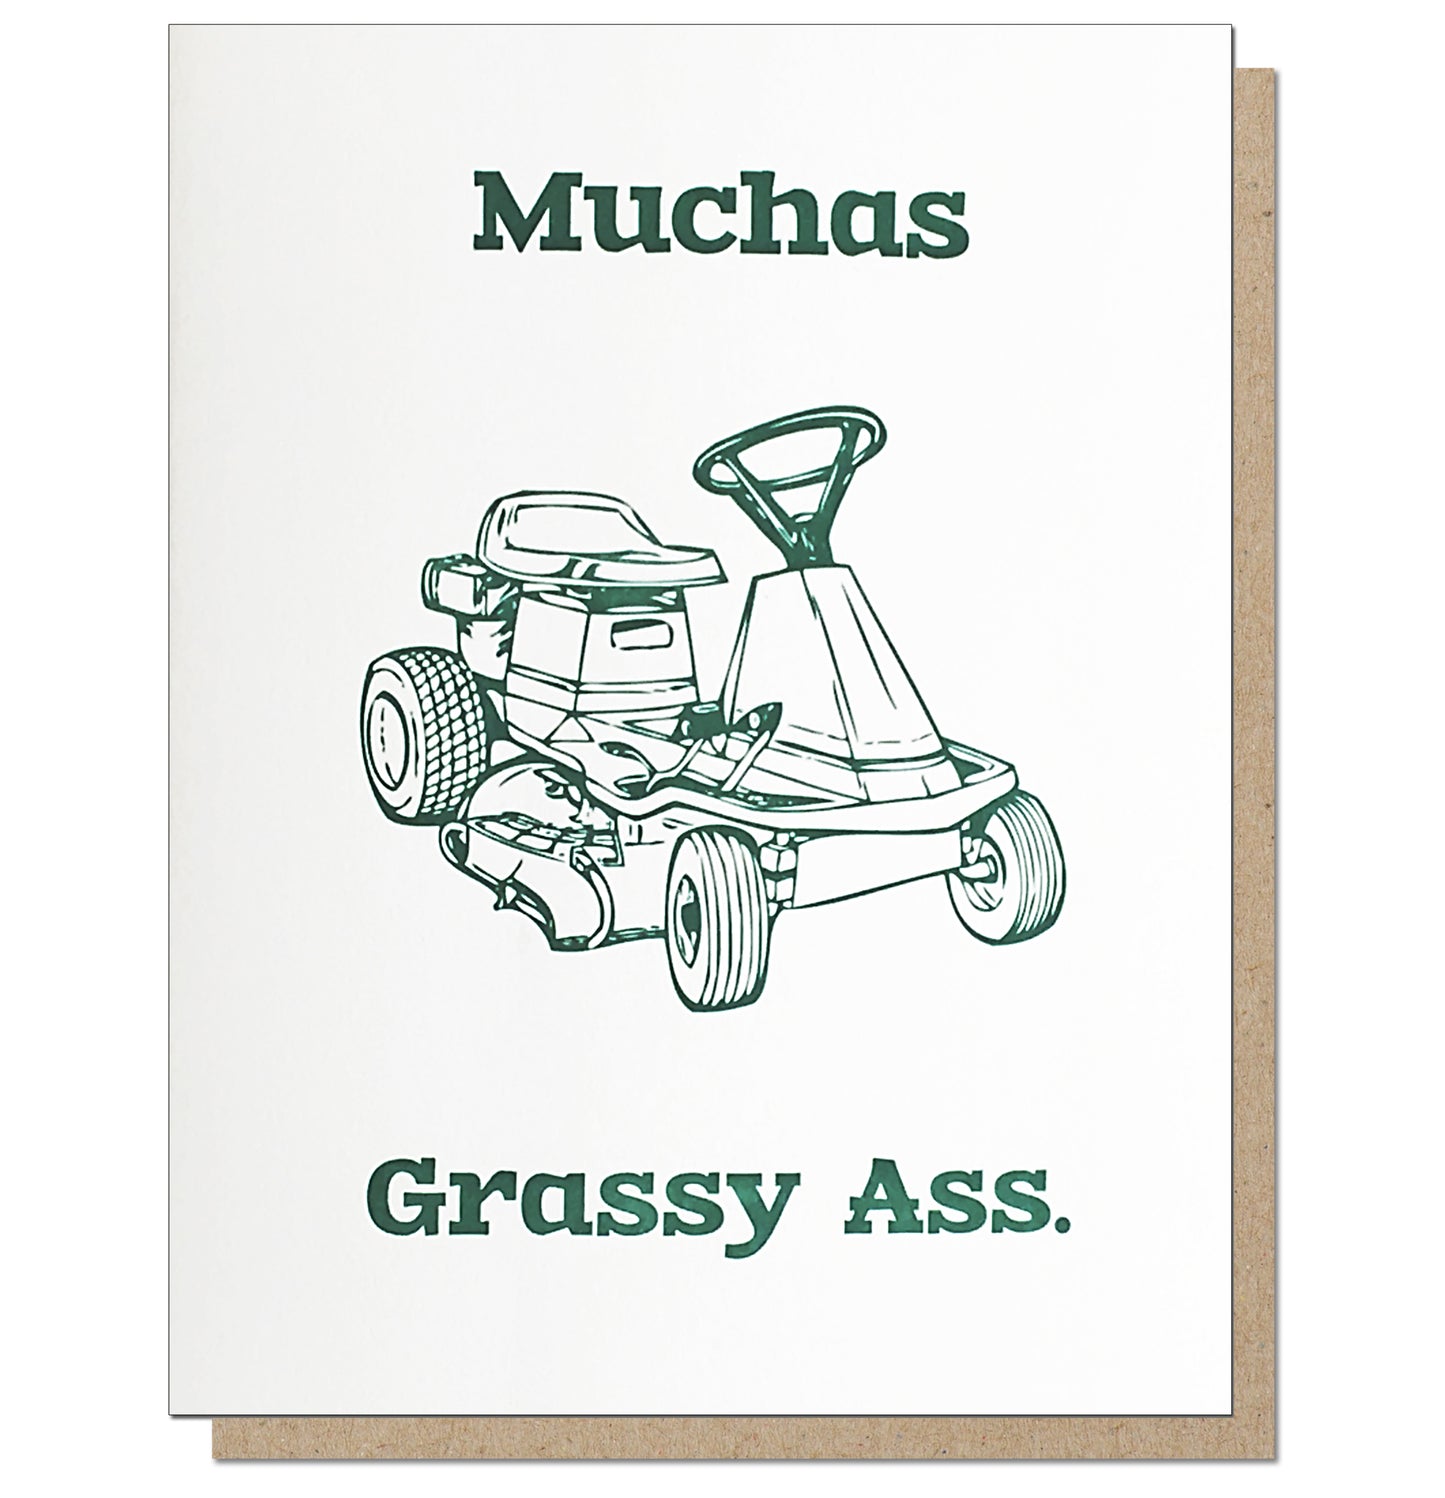 Muchas Grassy Ass